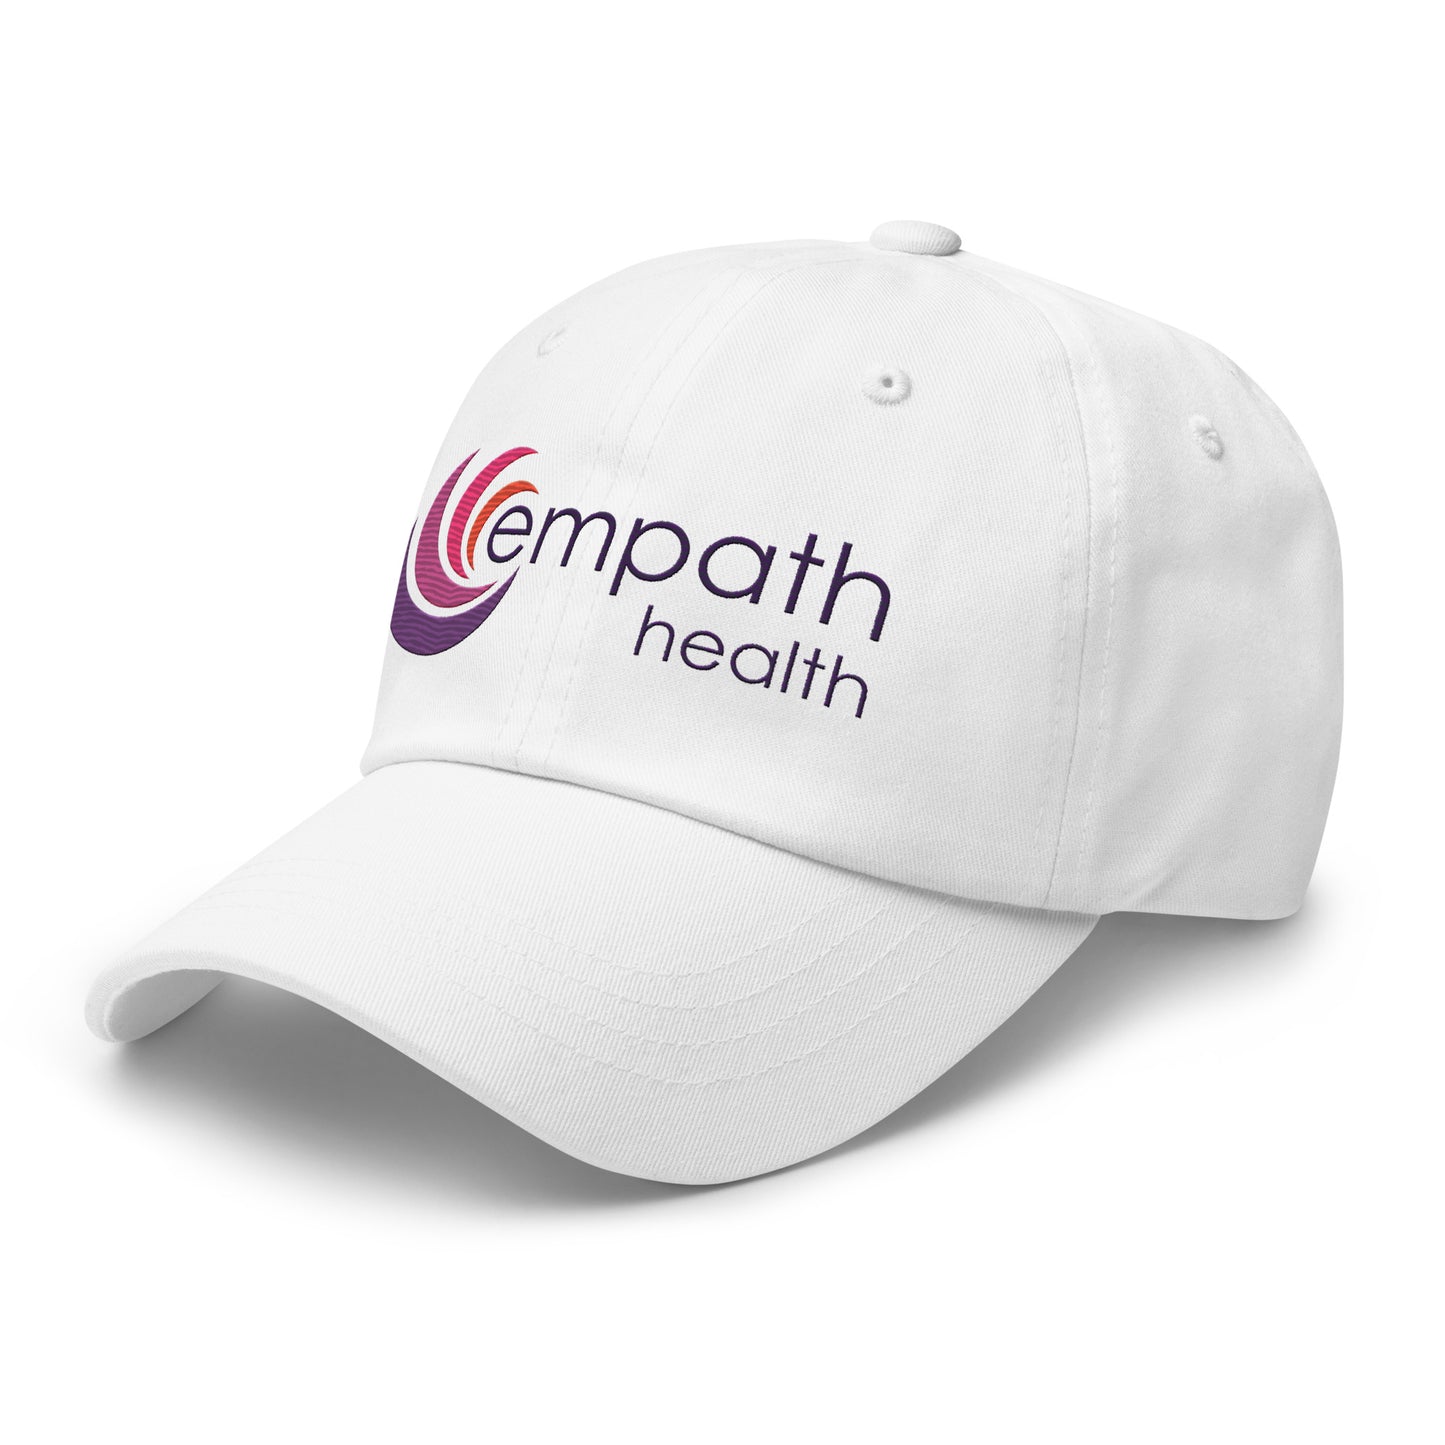 Classic Dad hat - Empath Health